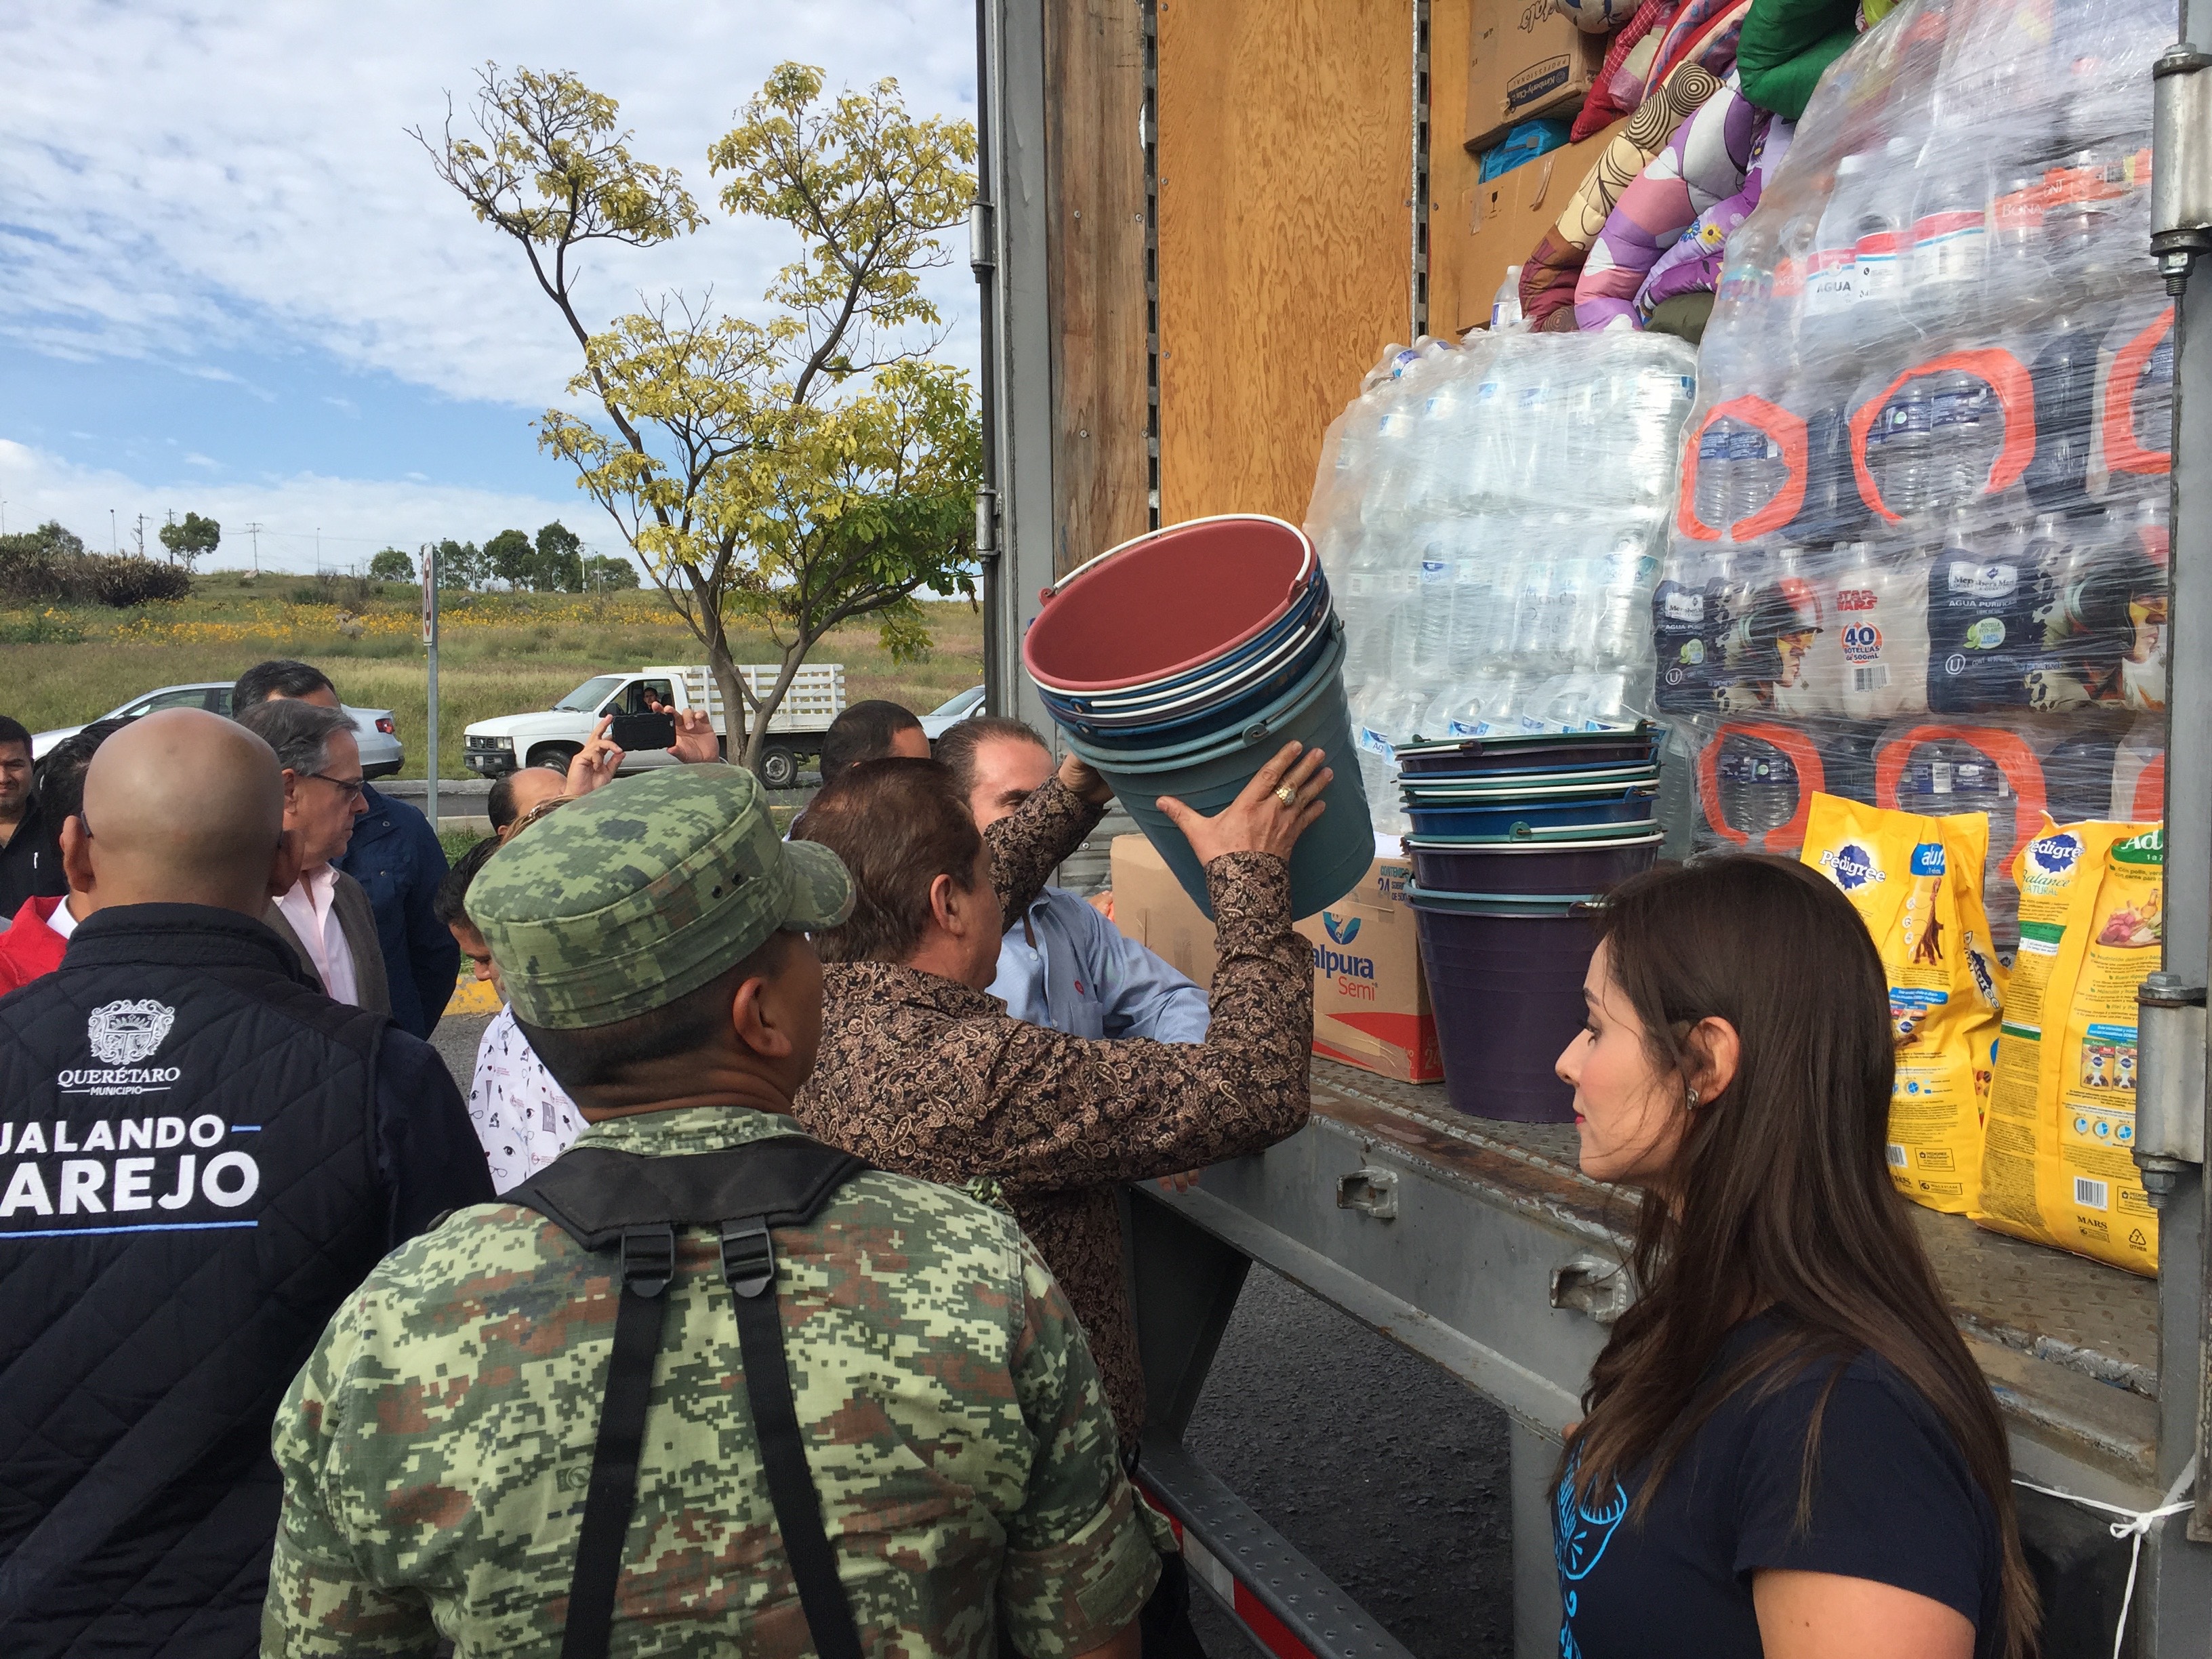  Municipio de Querétaro enviará dos camiones con víveres a Chiapas y Morelos